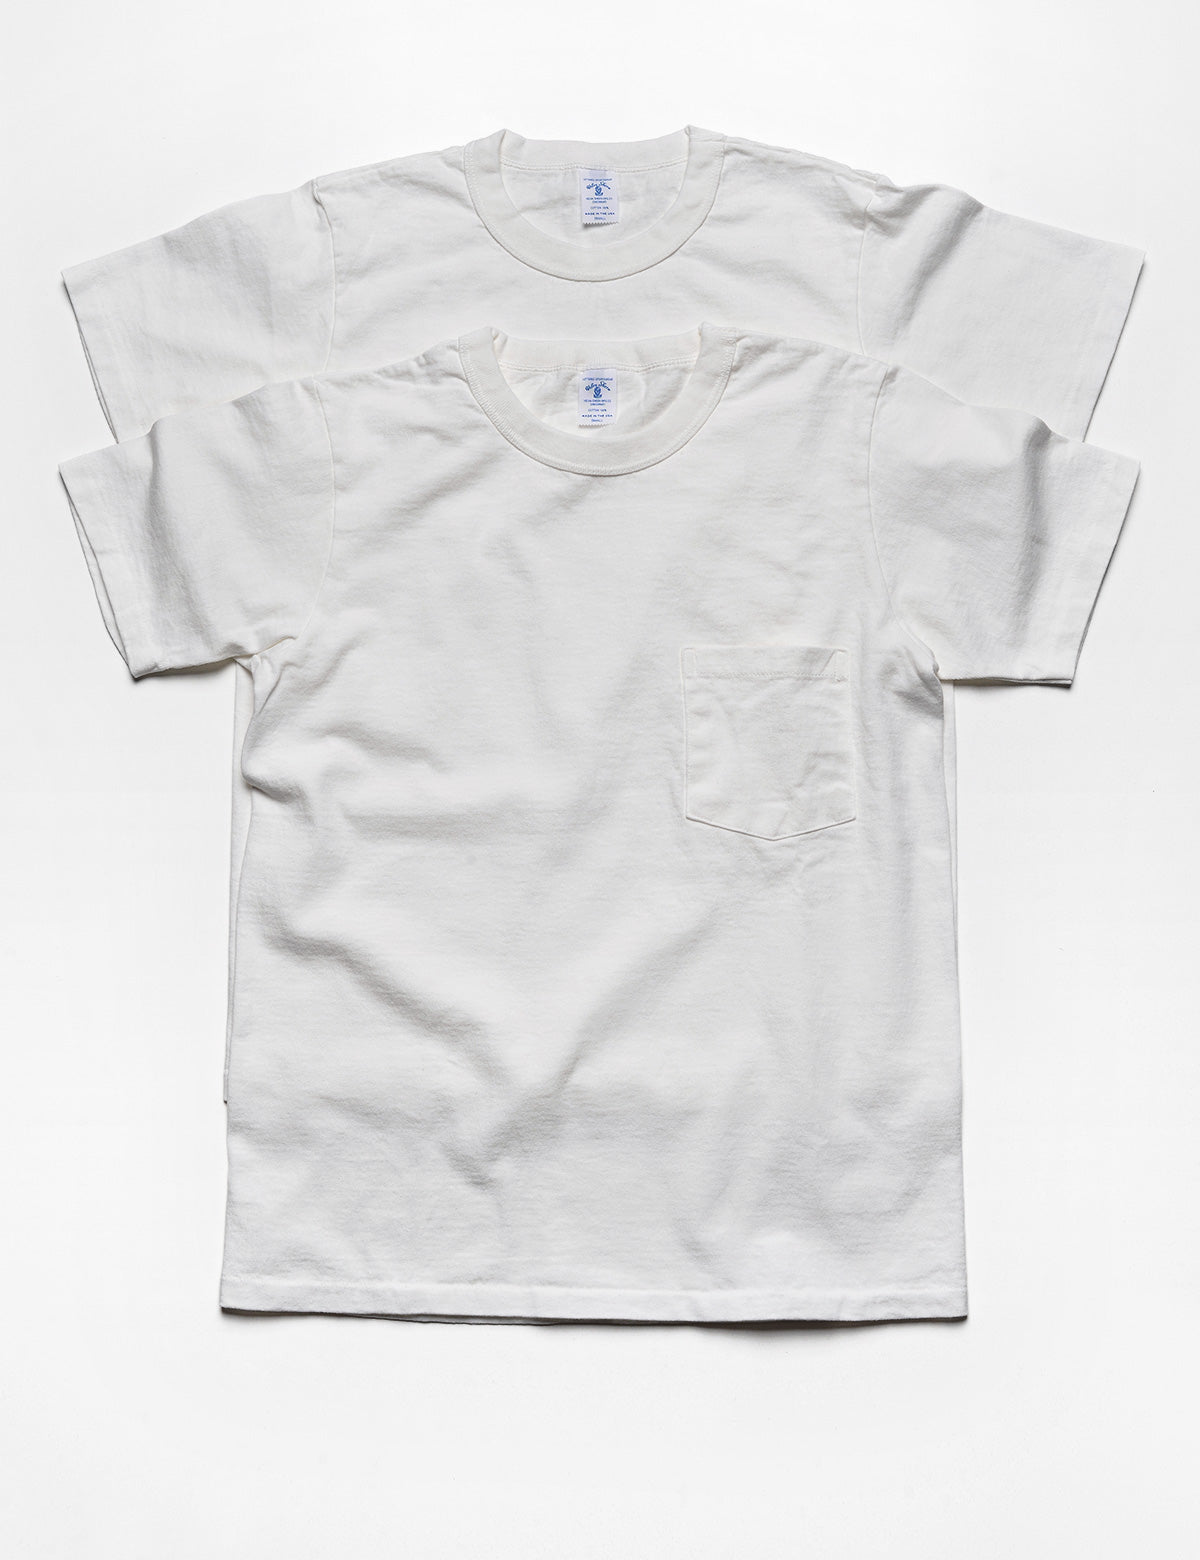 2-Pack Short Tee in Tailors Sleeve Pocket – Brooklyn White